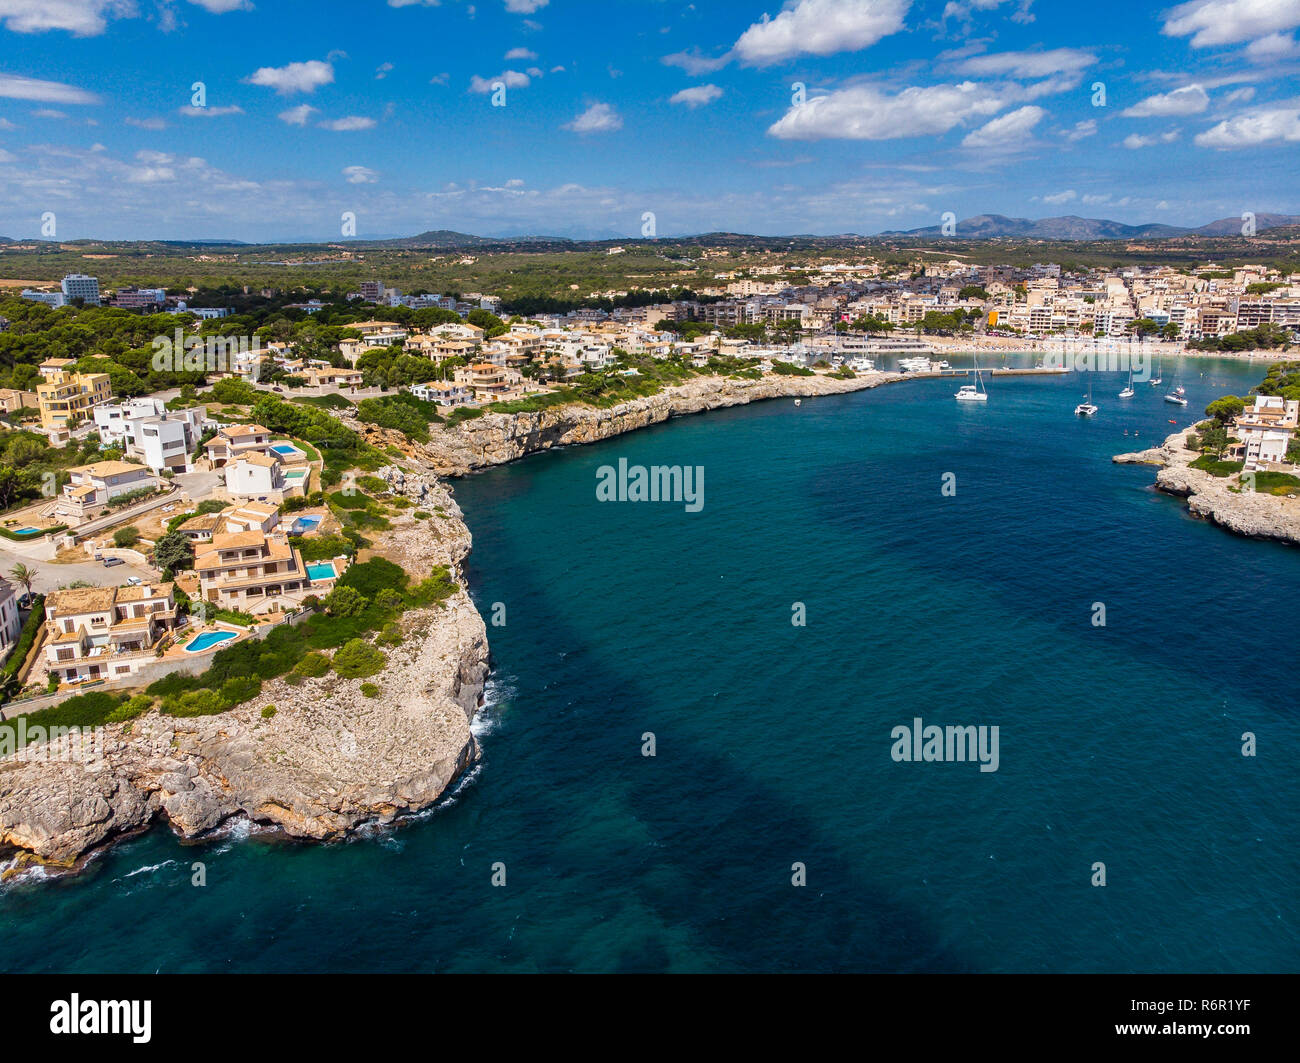 Drohnenaufnahme, Küste von Porto Cristo mit Villen und Naturhafen, Cala Manacor, Porto Cristo, Mallorca, Balearen, Spanien Foto Stock